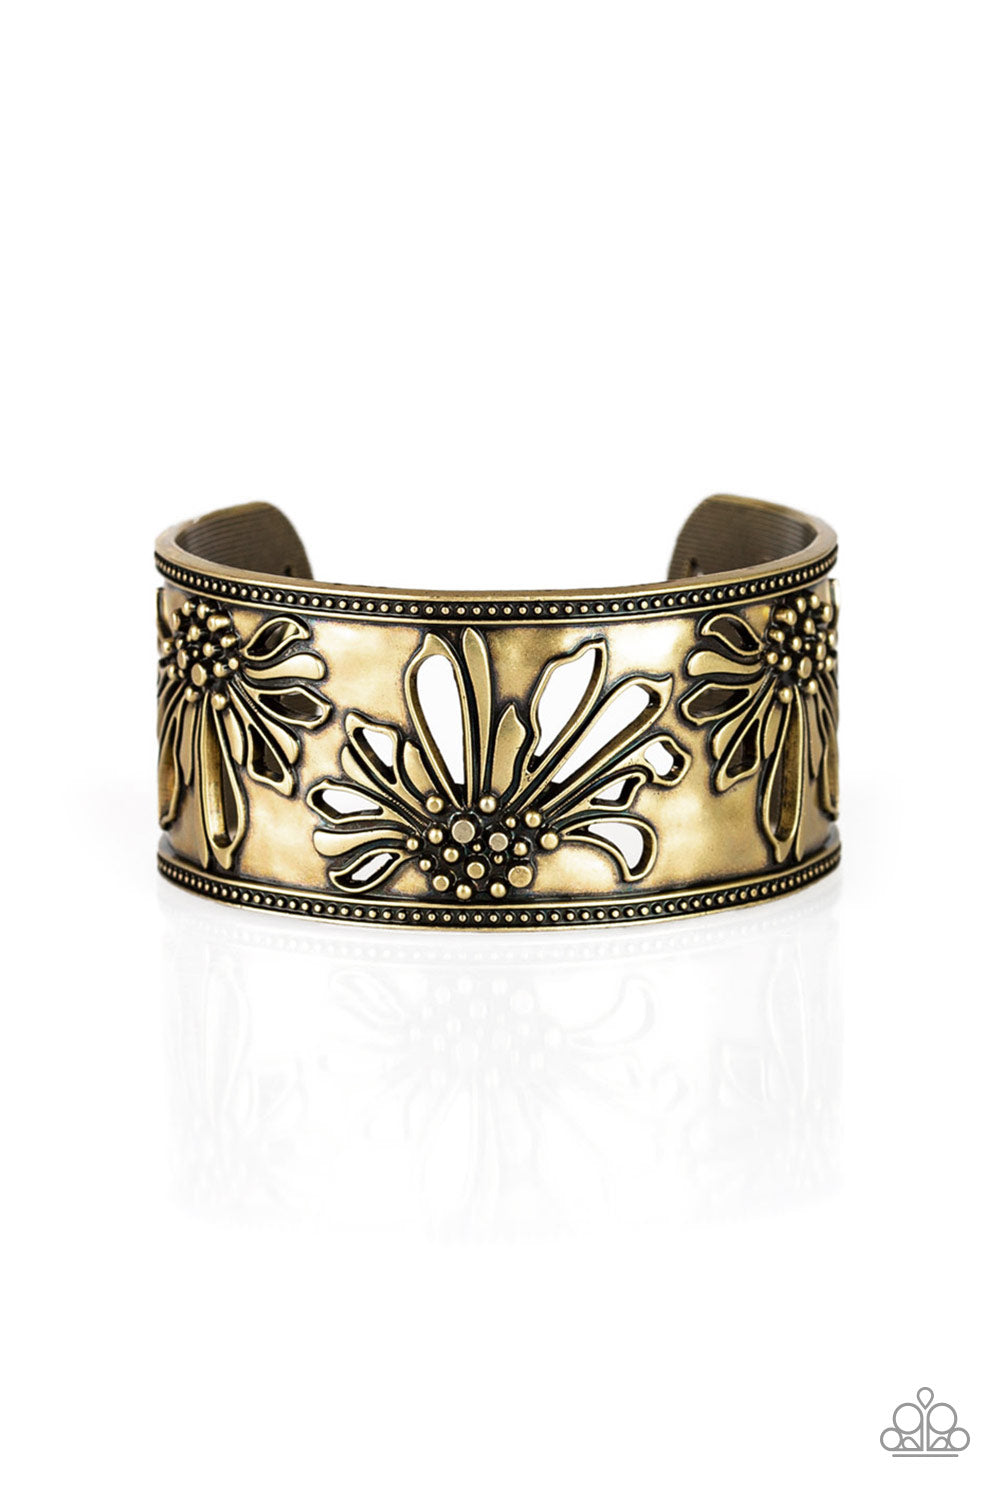 Where the Wildflowers Are - brass cuff bracelet 514